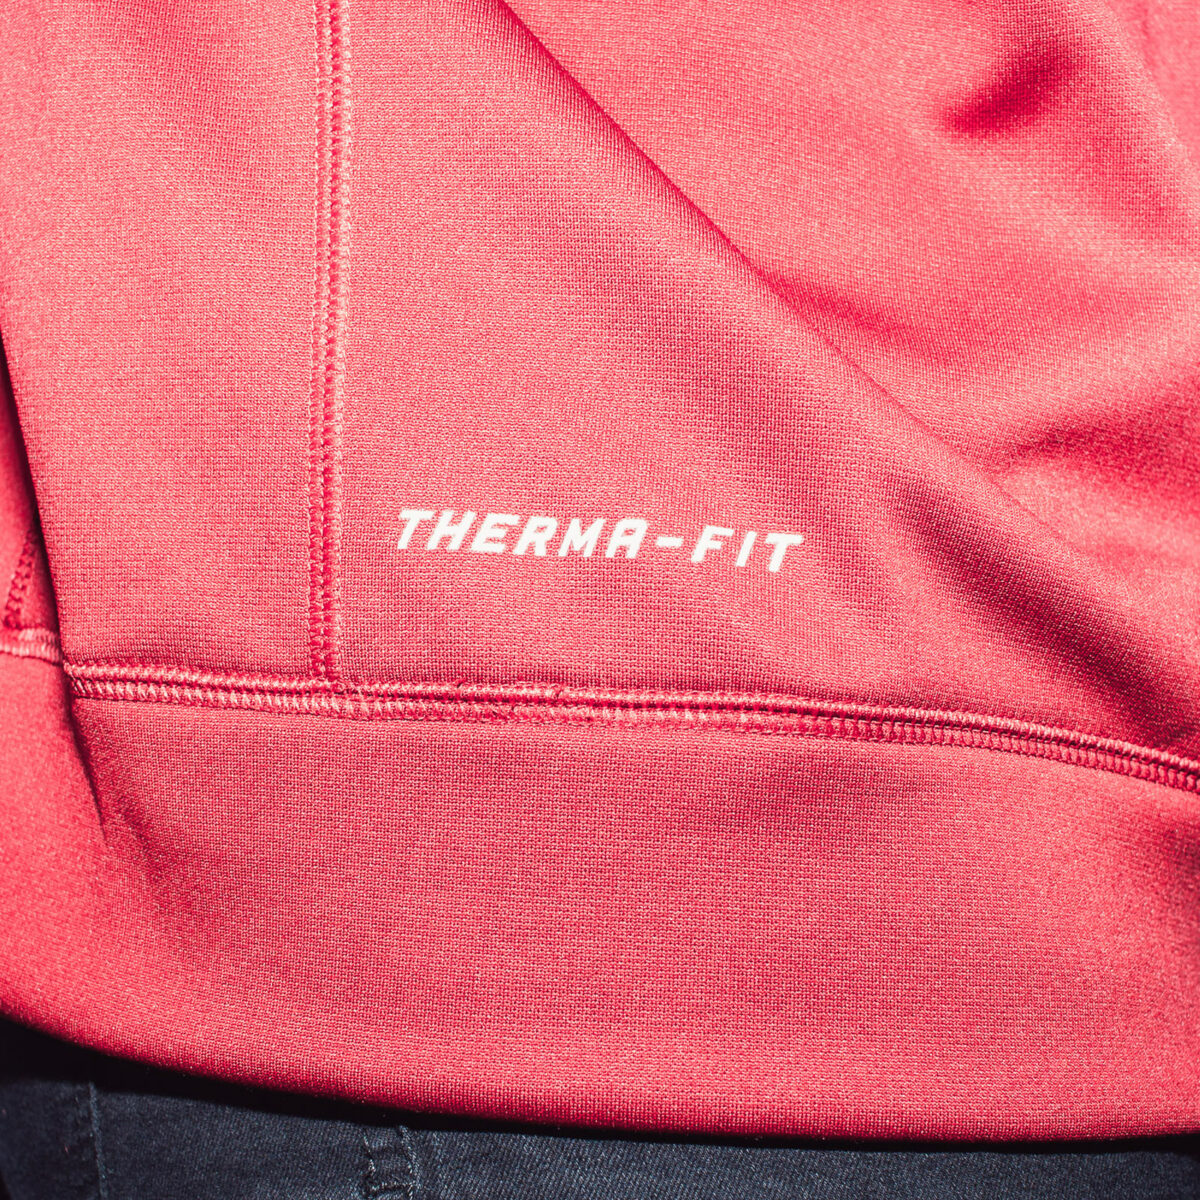 Nike Therma Fit Arkansas College Sweatshirt sale